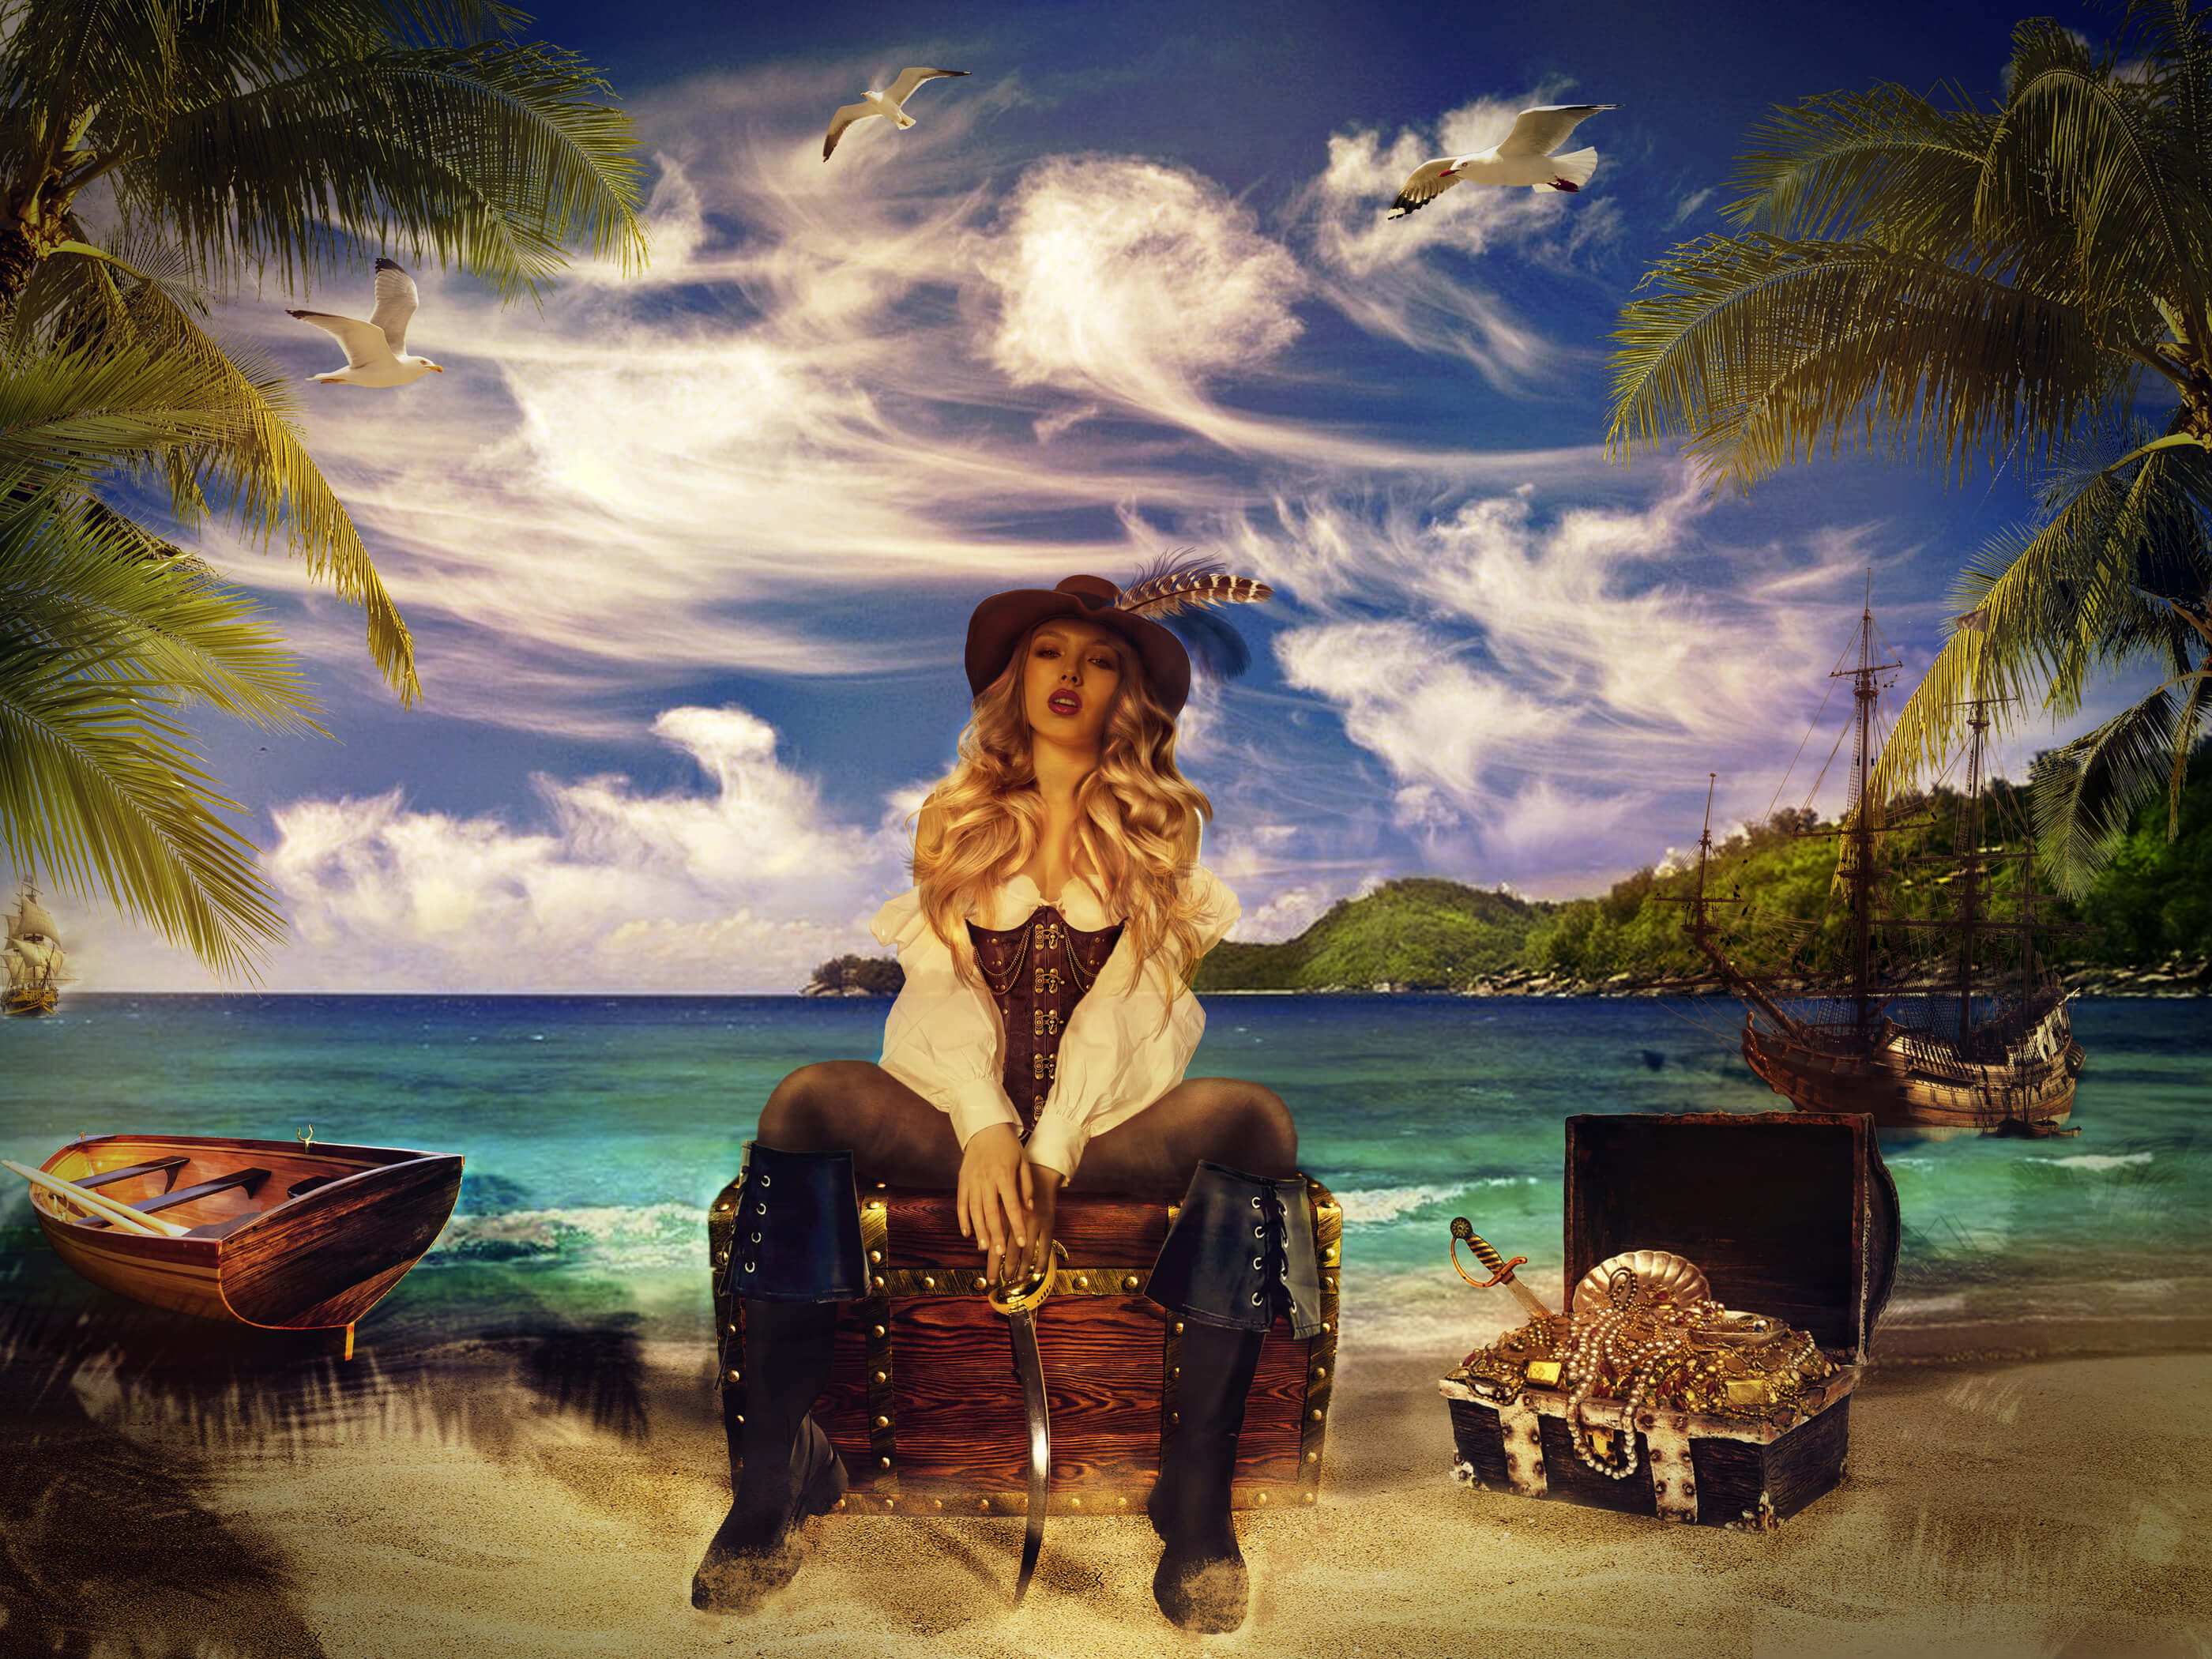 Итоги состязания "Пиратские приключения"